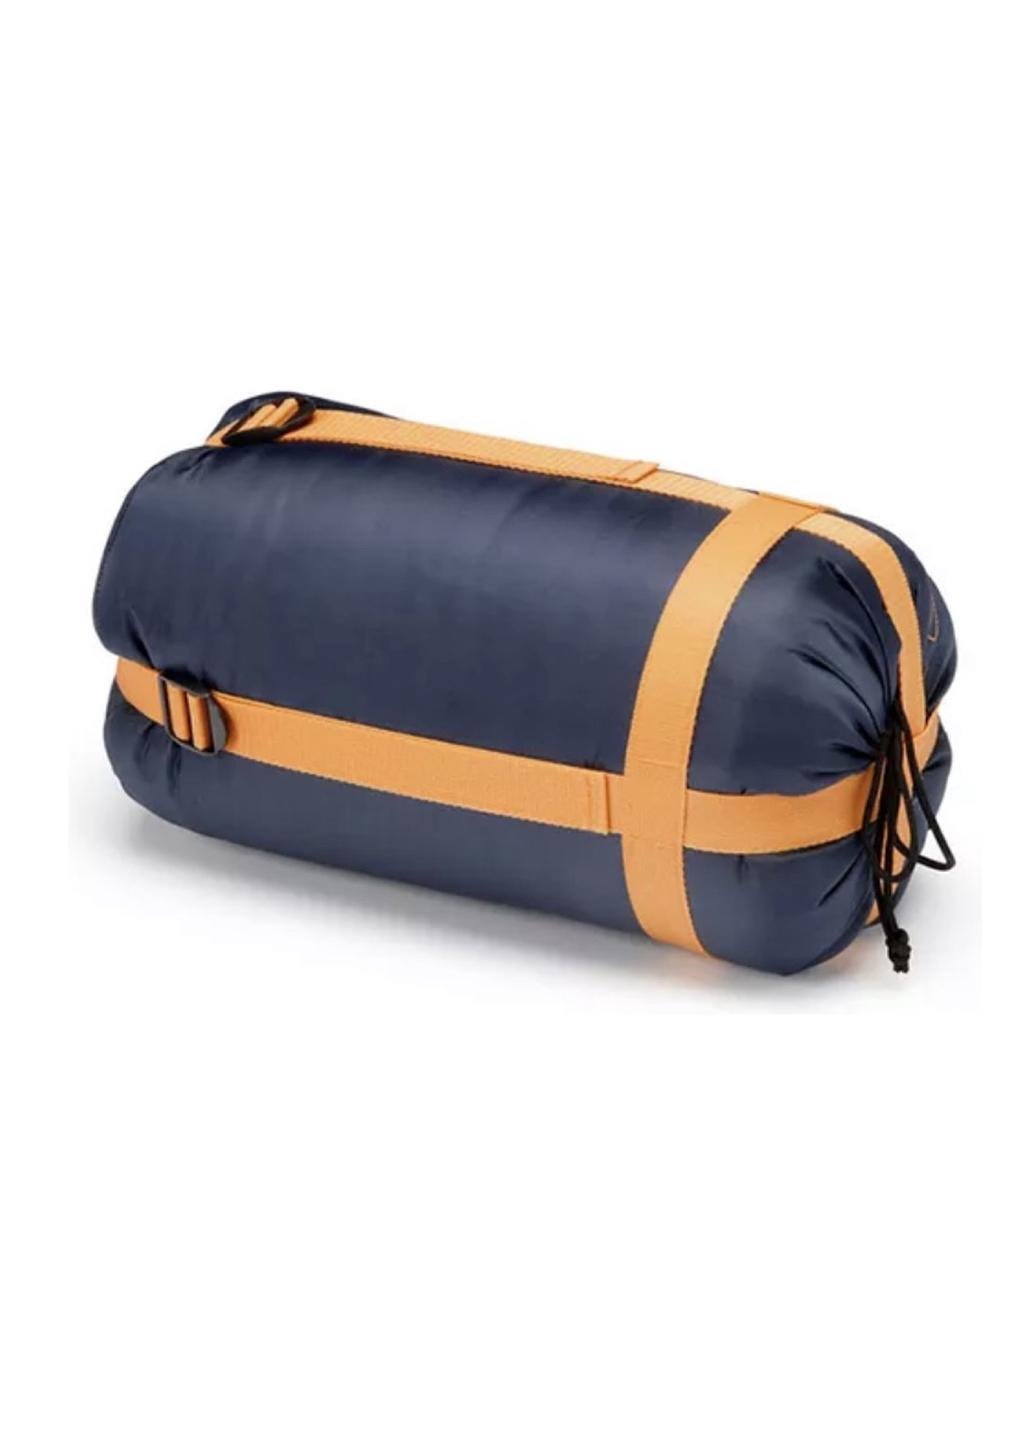 Cпальний мішок Nomad Sleeping Bag 225x71 cм Blue/Grey (NMD-SB-BLGR) - фото 3